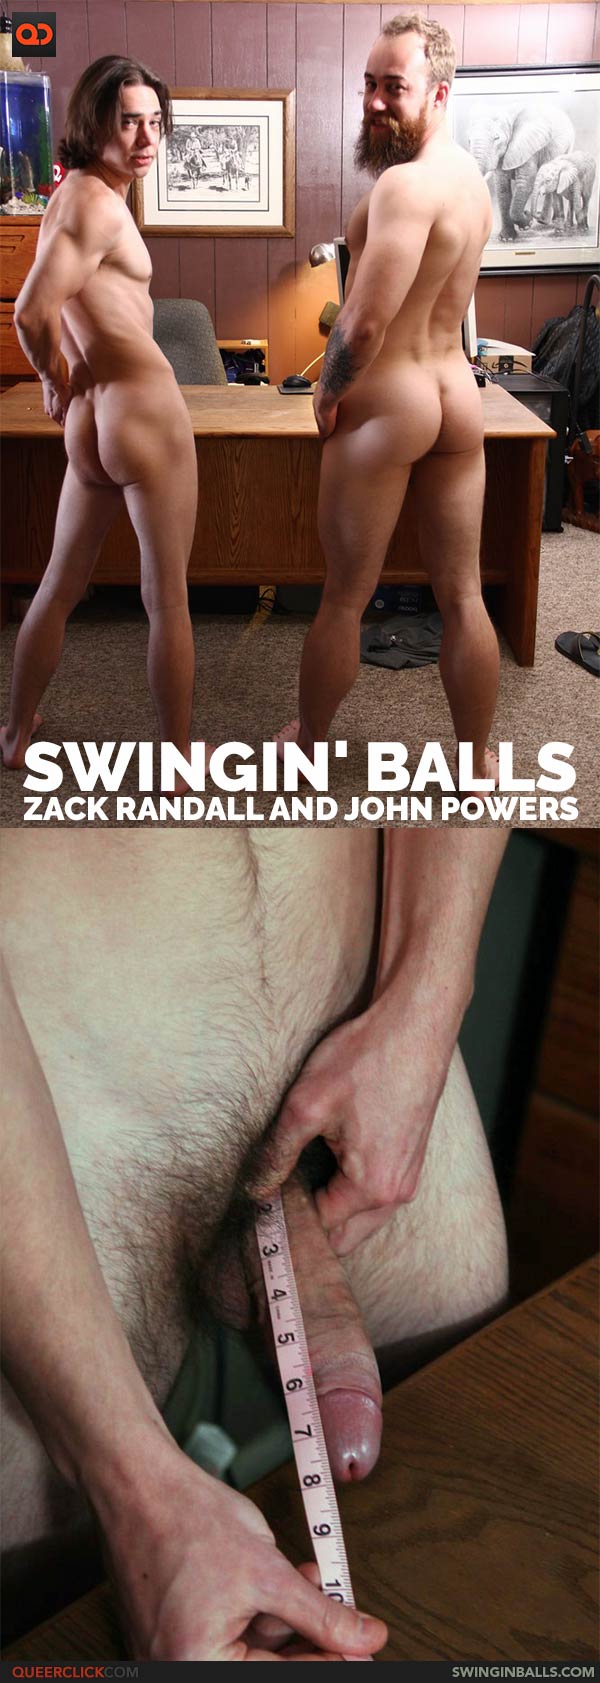 Swingin' Balls: Zack Randall and John Powers